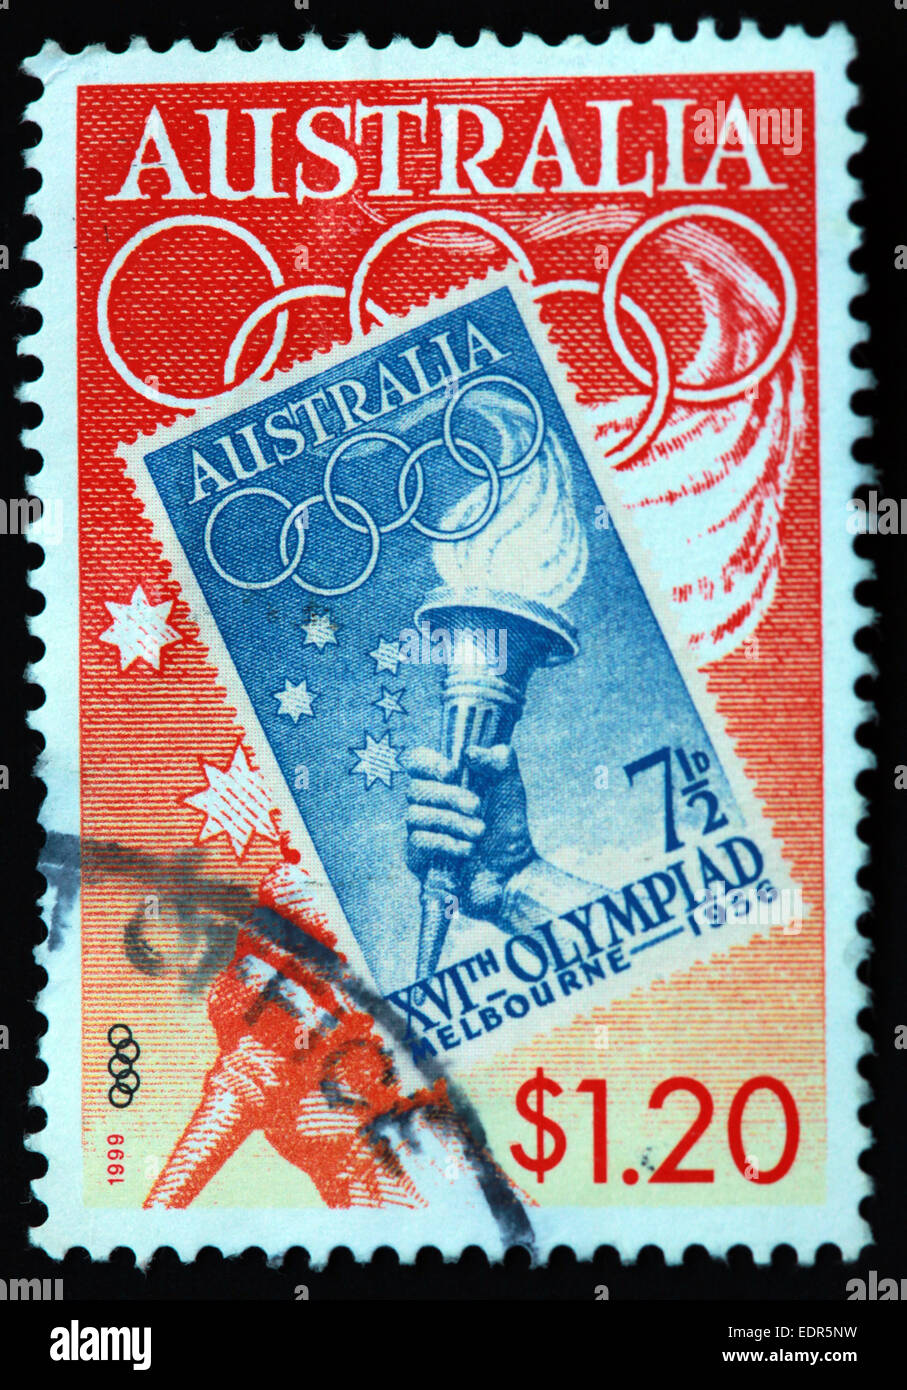 Used and postmarked Australia / Austrailian Stamp 1999 $1.20 Melbourne 1956 XVI Olympiad Stock Photo